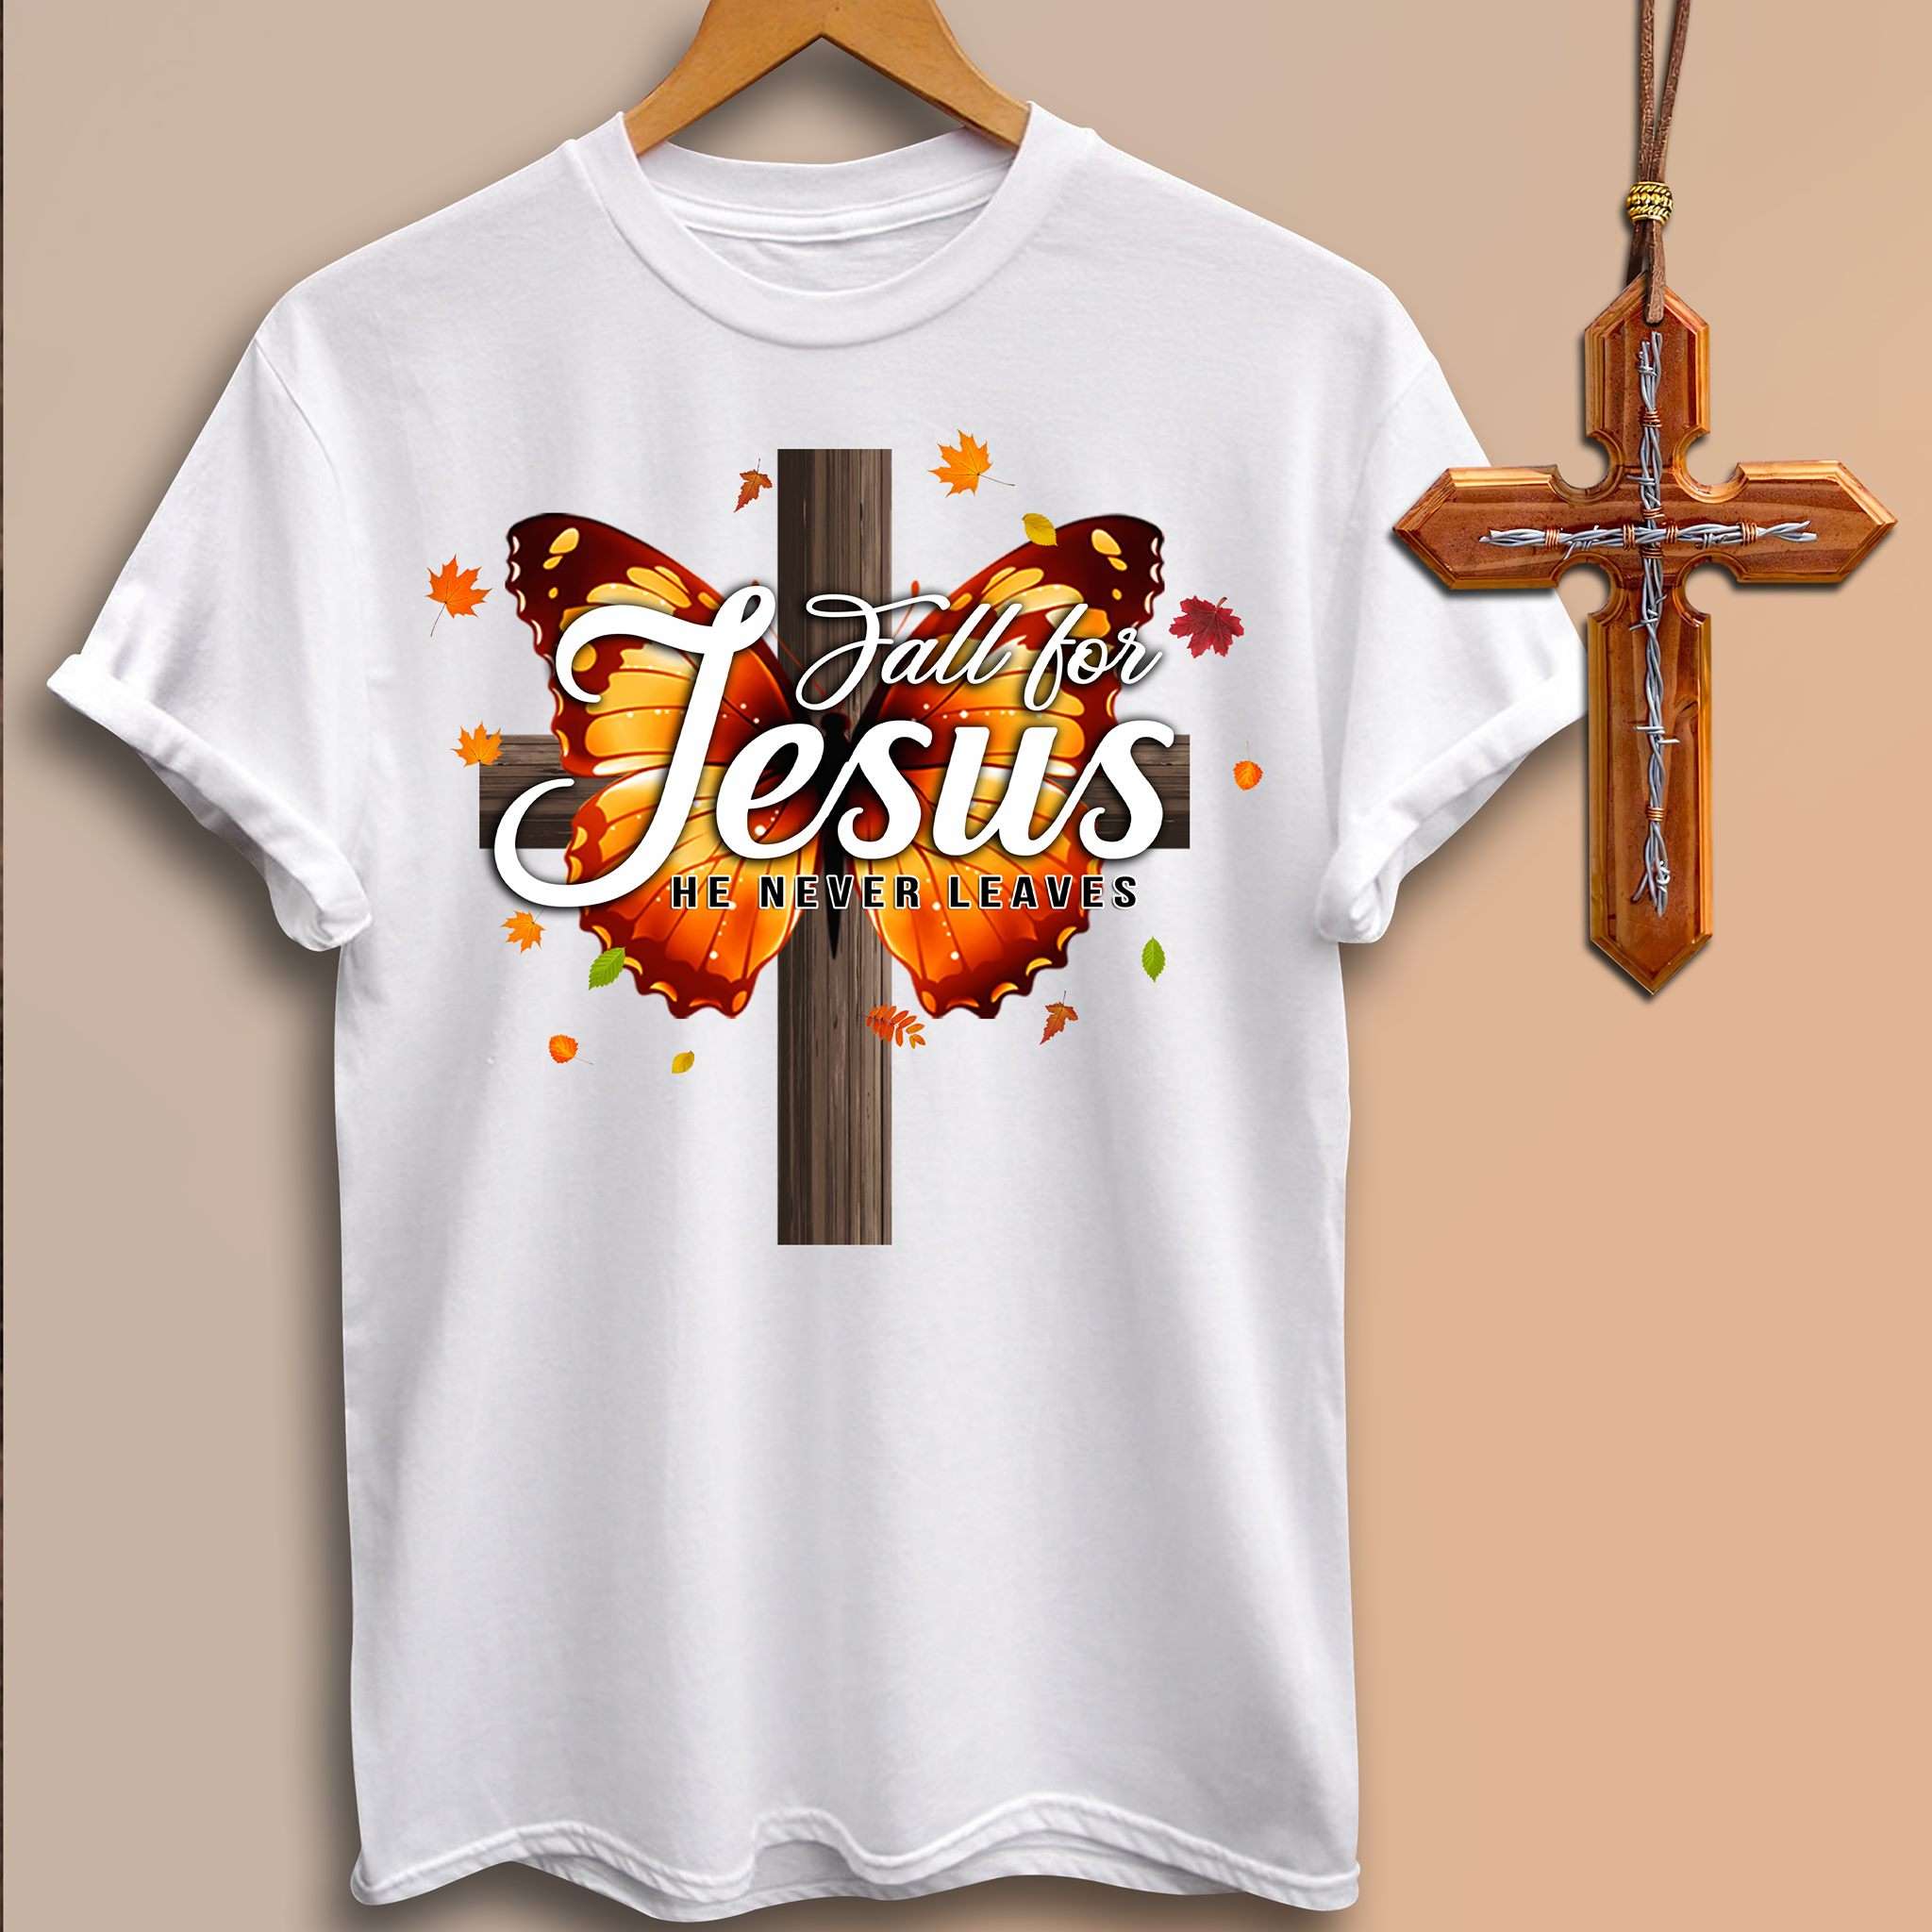 Butterfly God's Cross - Fall for Jesus he never leaves